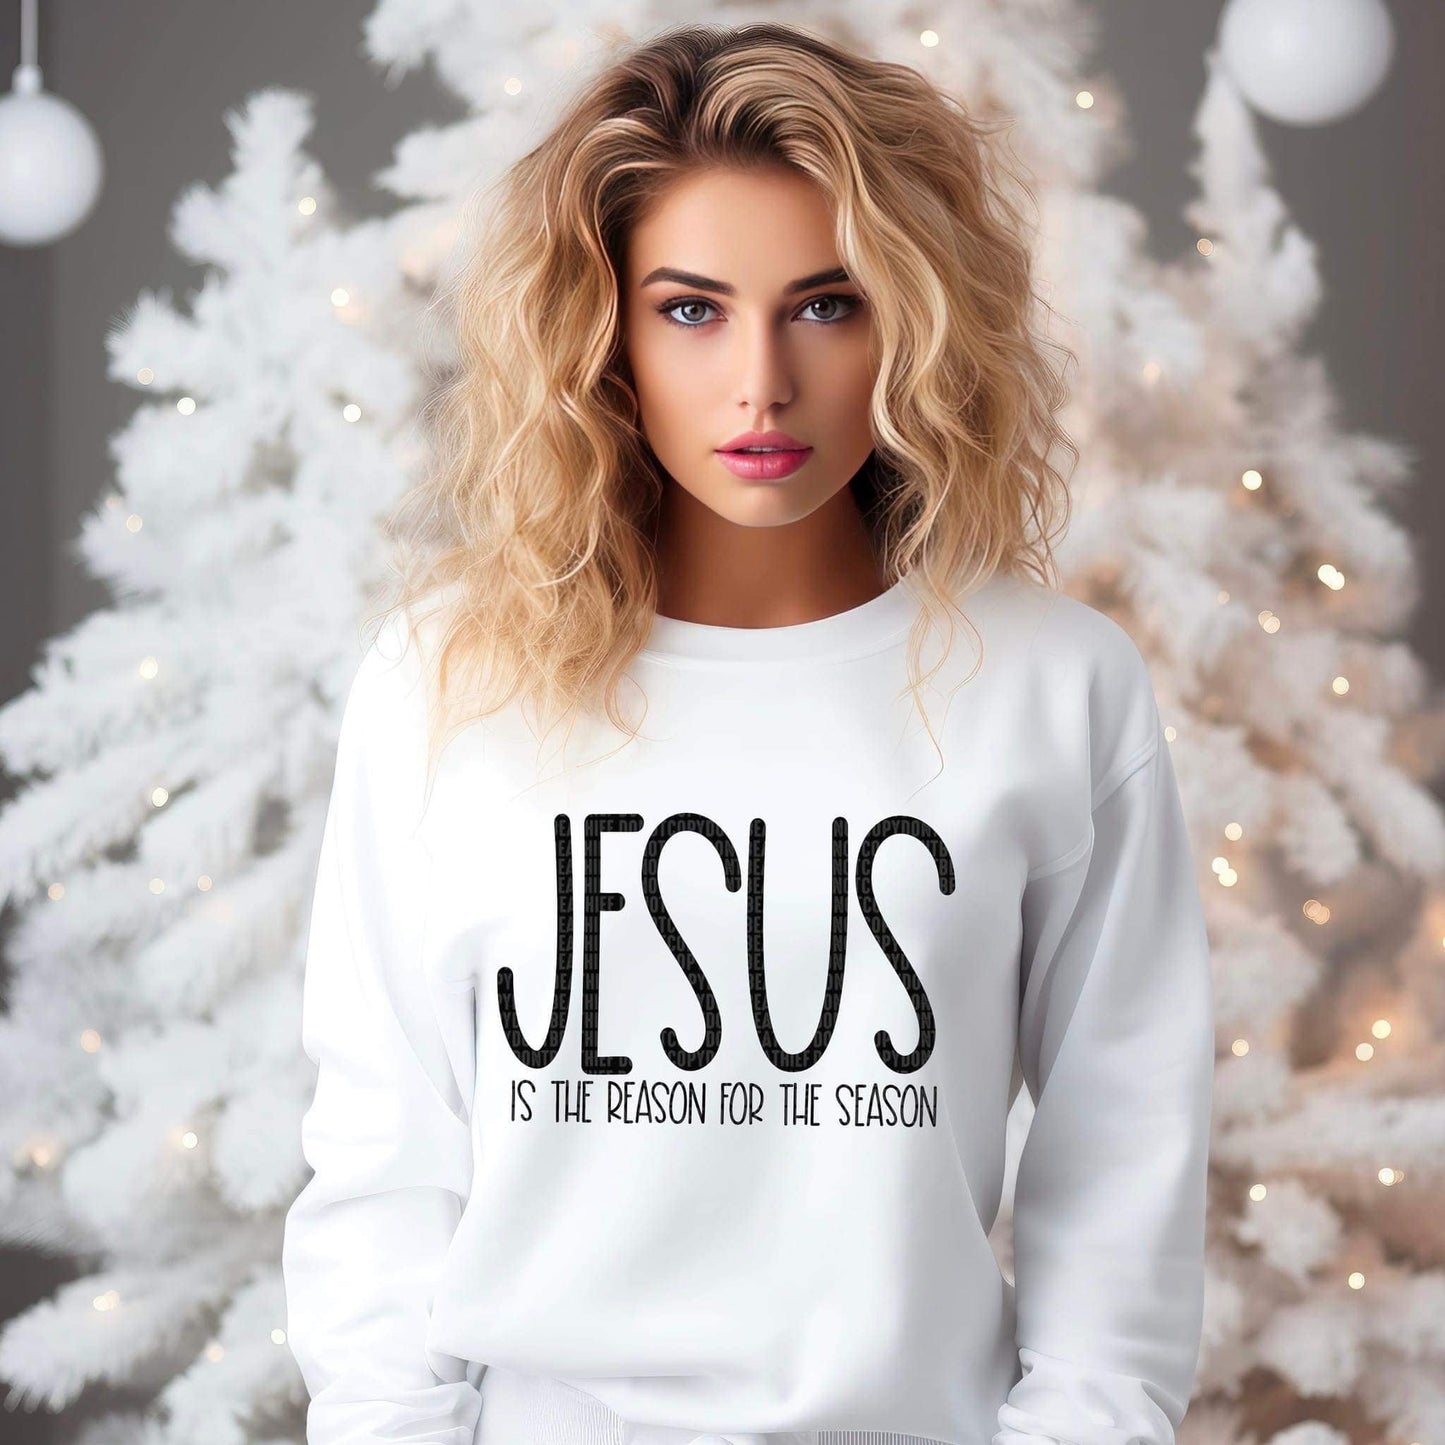 Jesus is the reason for the season- sweatshirt